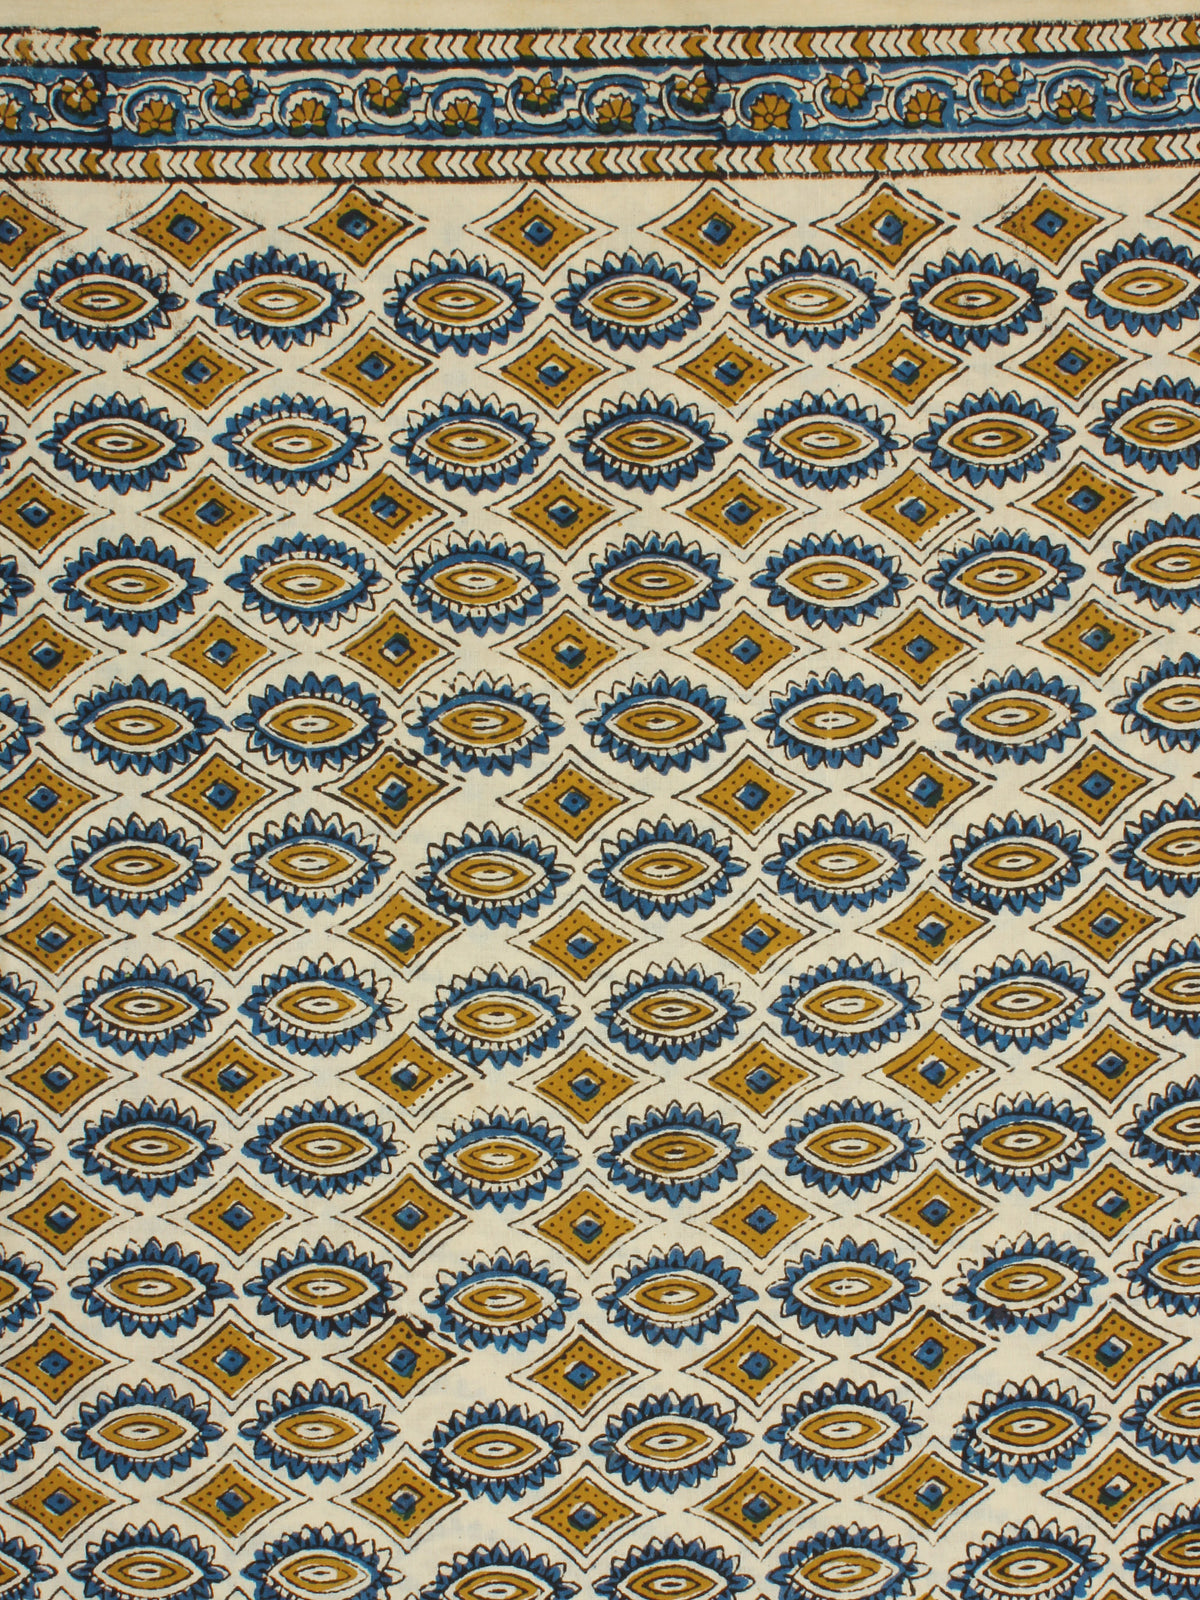 Ivory Mustard Indigo Hand Block Printed Cotton Fabric Per Meter - F001F2263